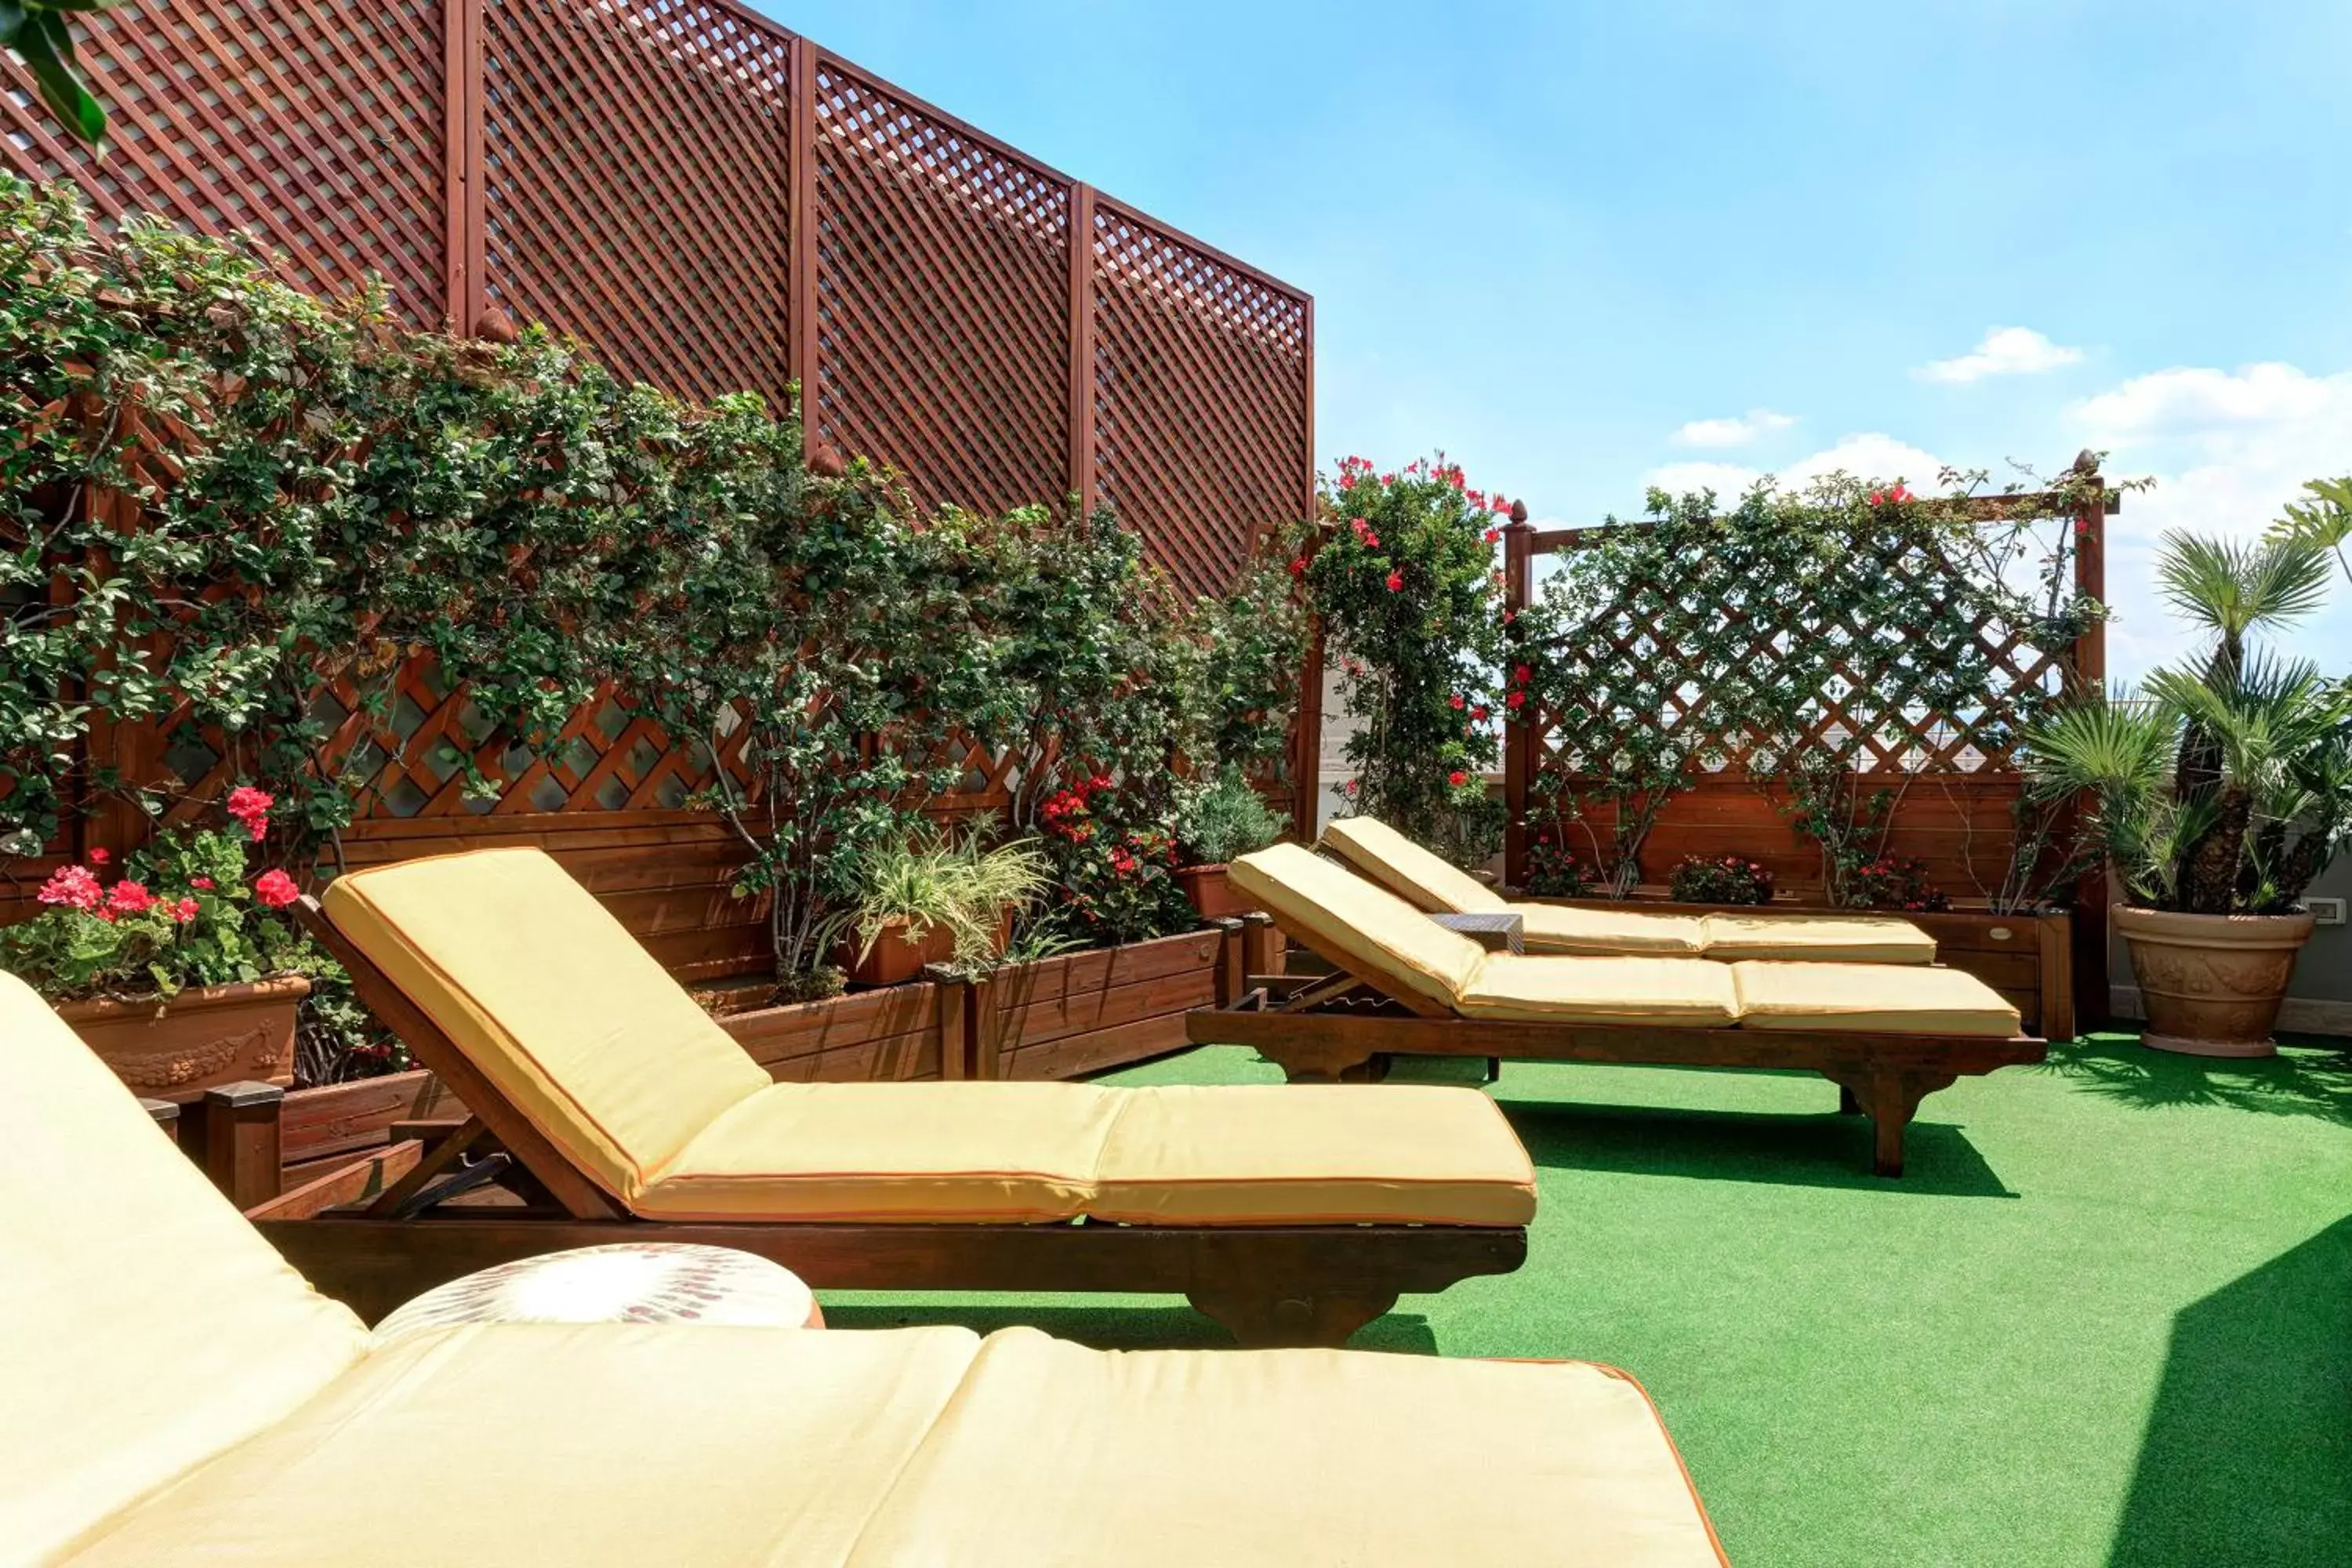 Area and facilities in Marcella Royal Hotel - Rooftop Garden